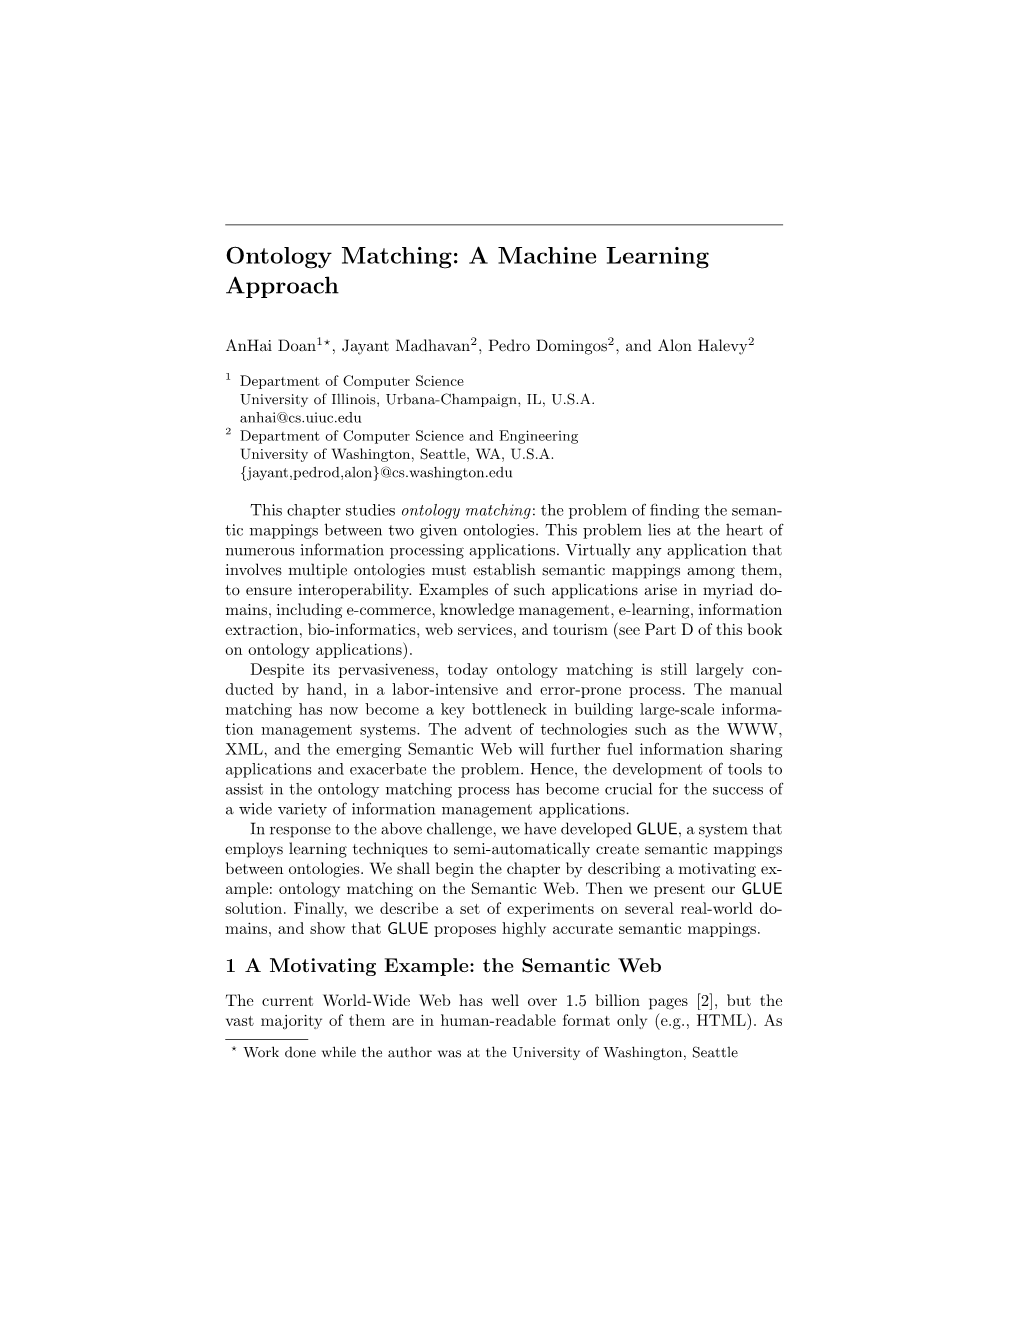 Ontology Matching: a Machine Learning Approach